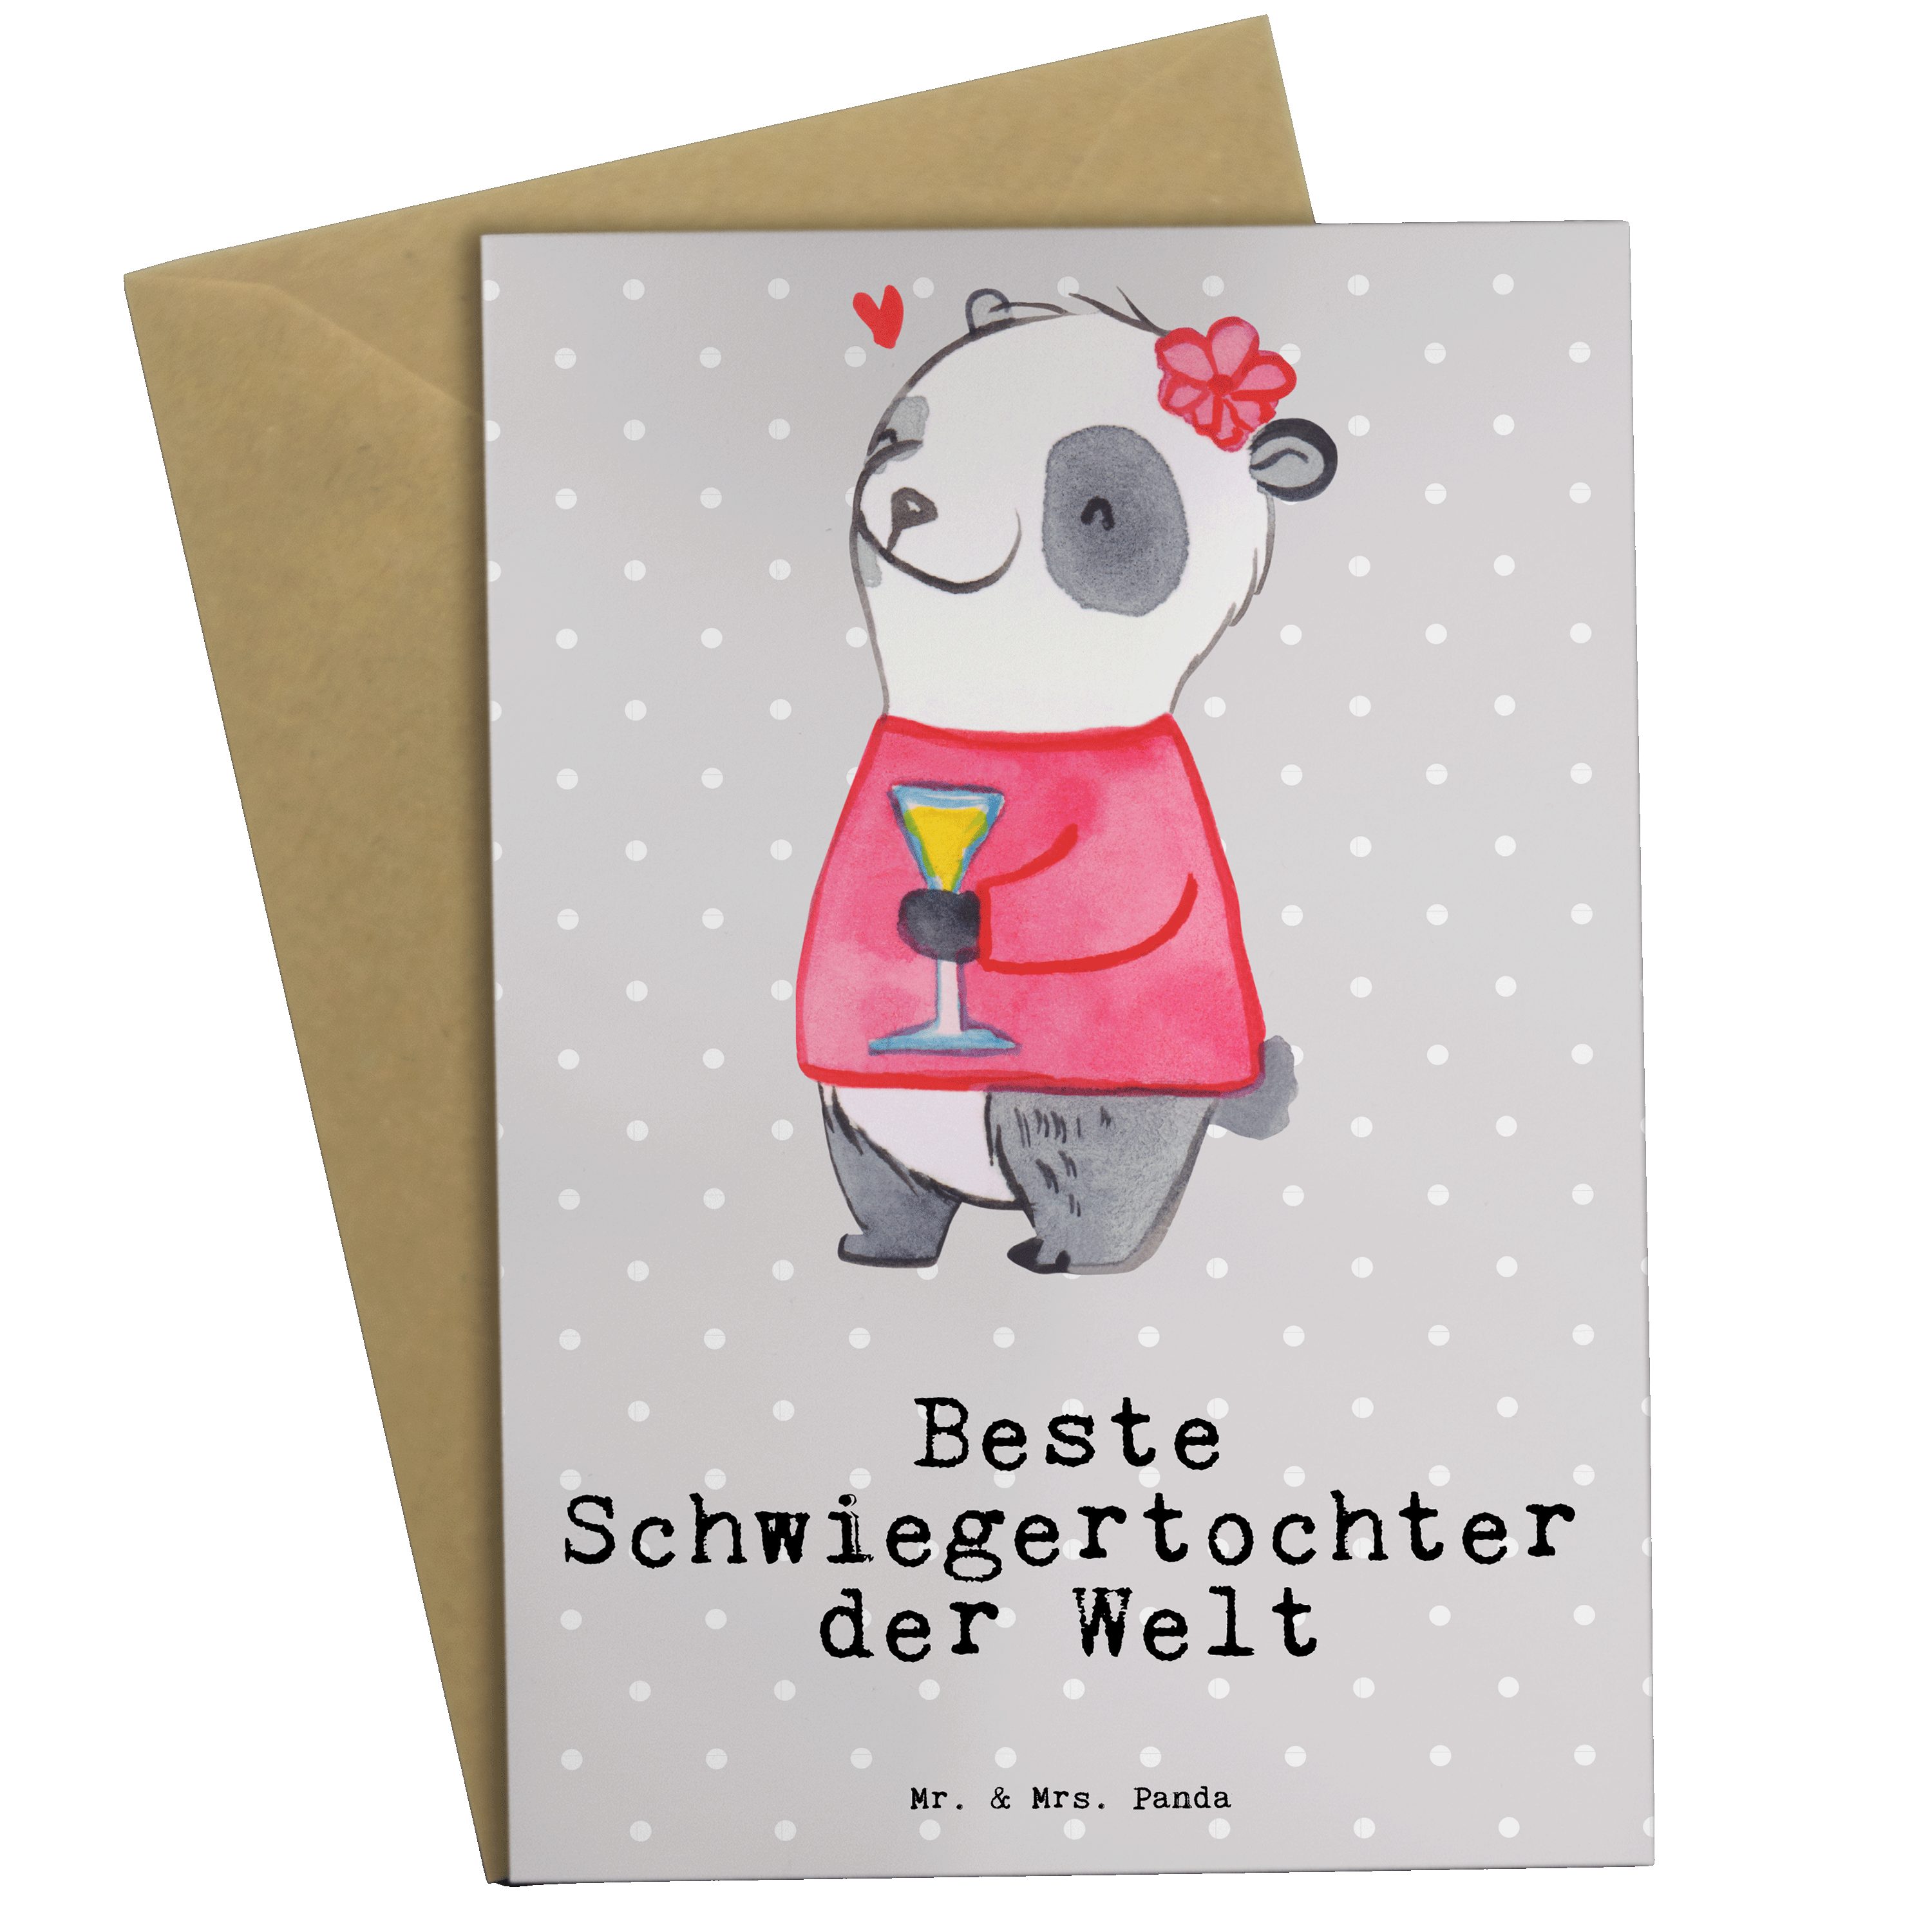 Beste Grußkarte & Geschenk, Pastell - Mr. Hoch Panda Mrs. - Panda Welt Schwiegertochter Grau der